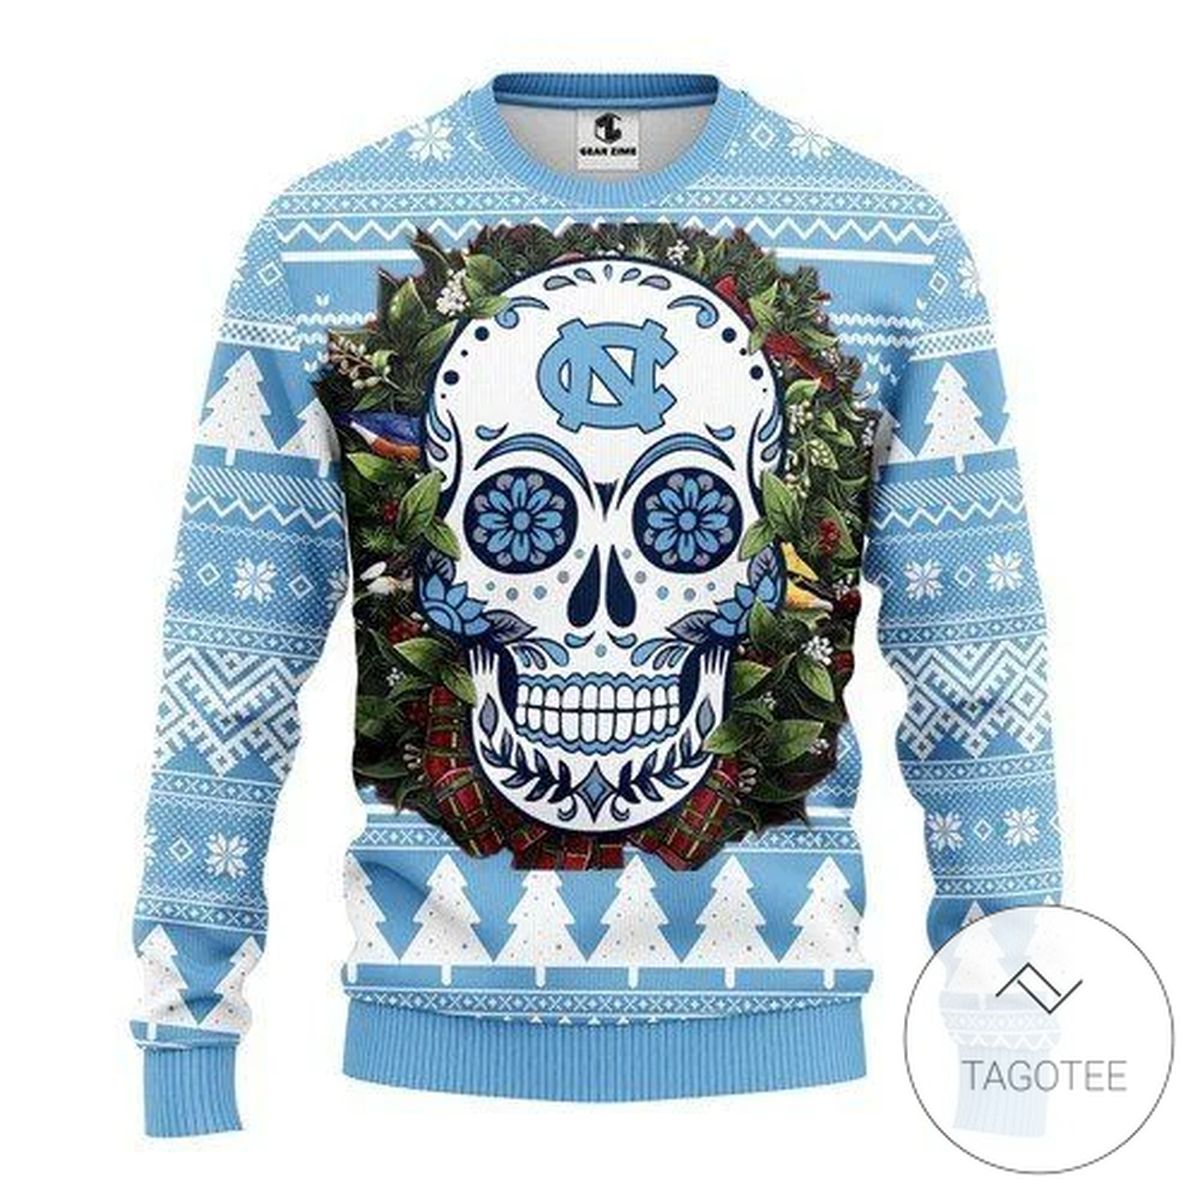 Ncaa North Carolina Tar Heels Skull Flower Sweatshirt Knitted Ugly Christmas Sweater